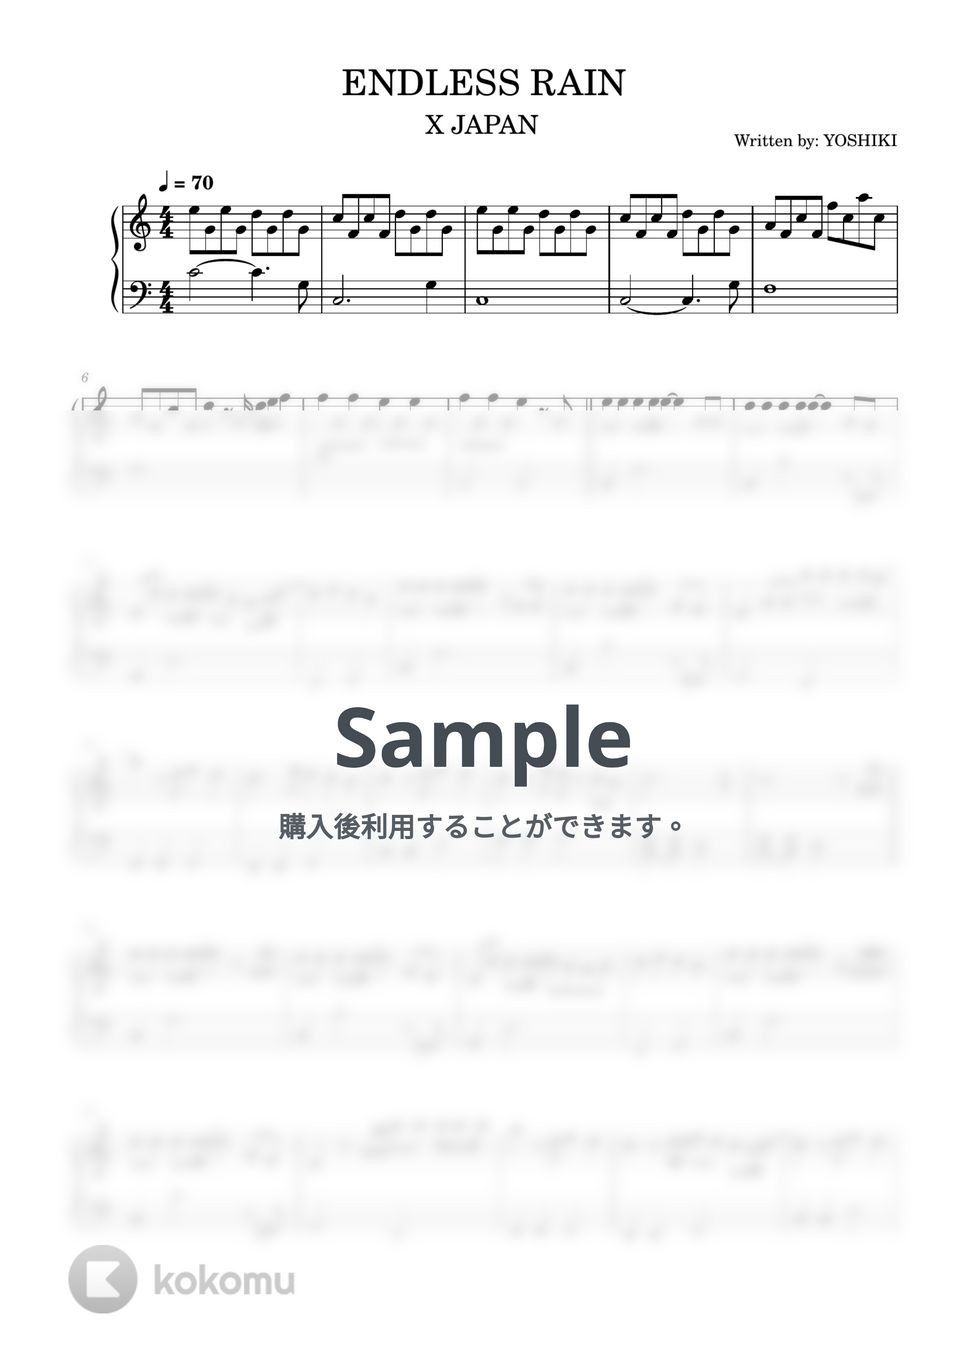 X JAPAN - ENDLESS RAIN (ピアノソロ／初級) by gokigen pichan